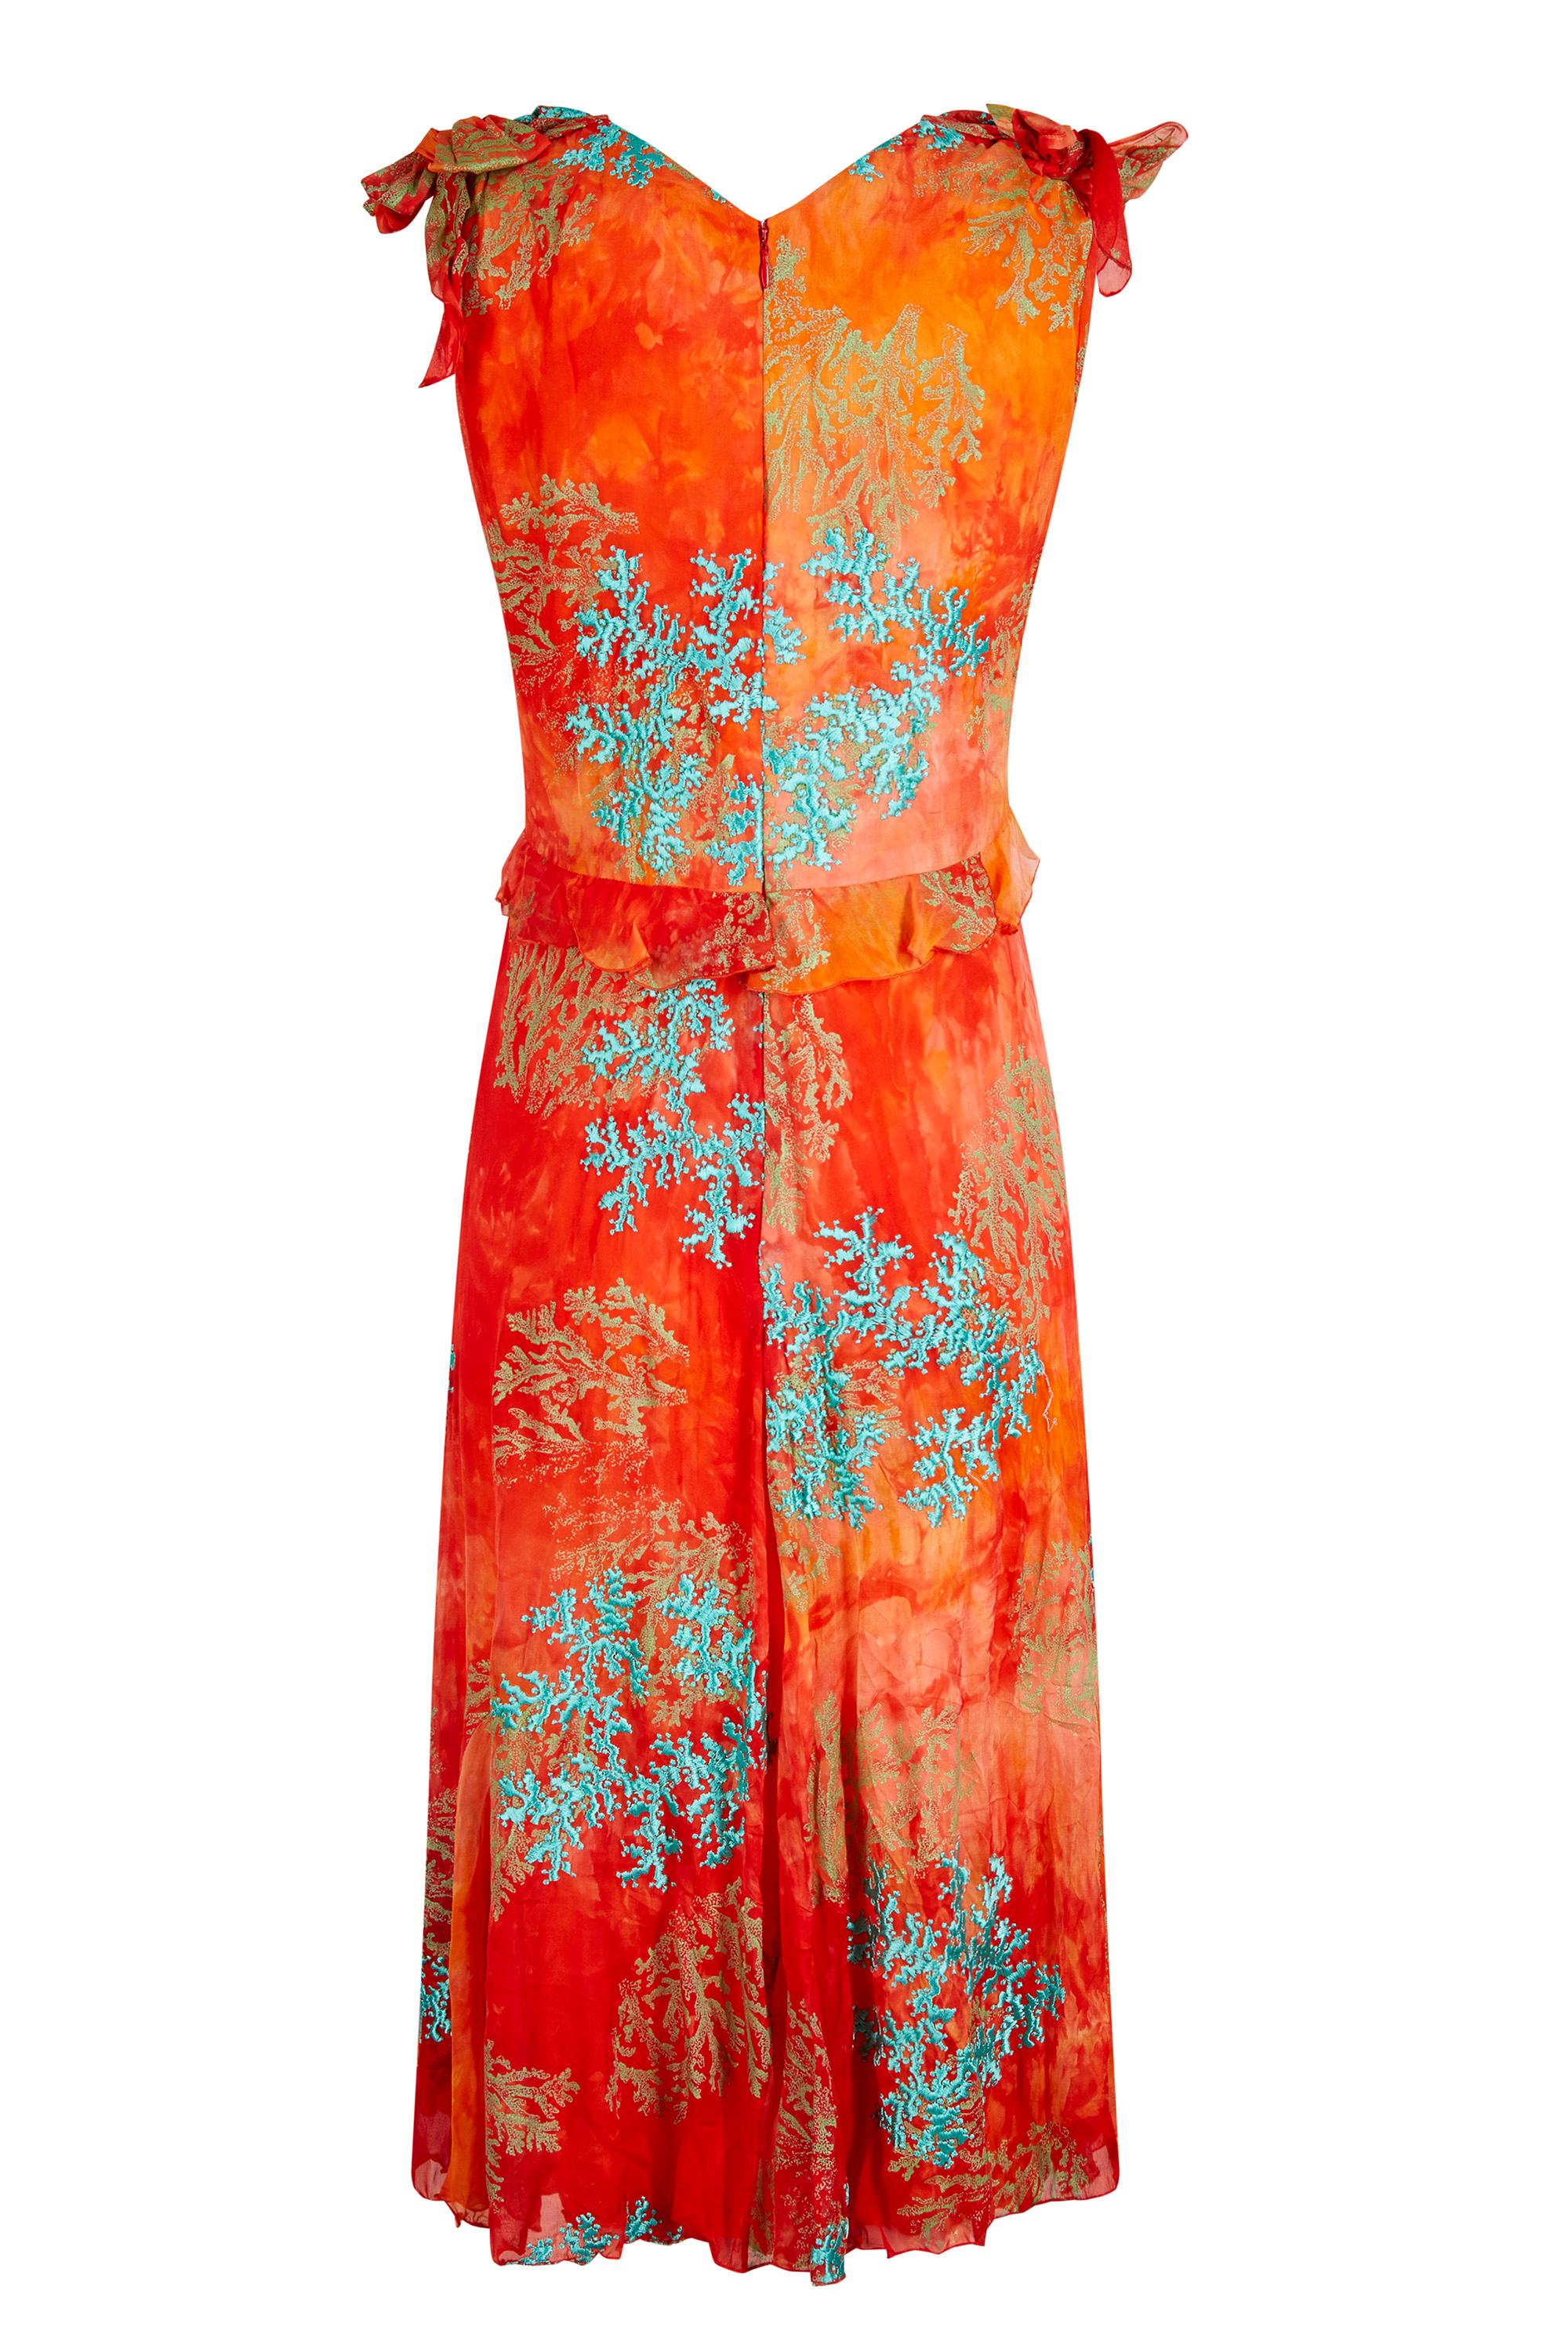 delfi collective orange dress